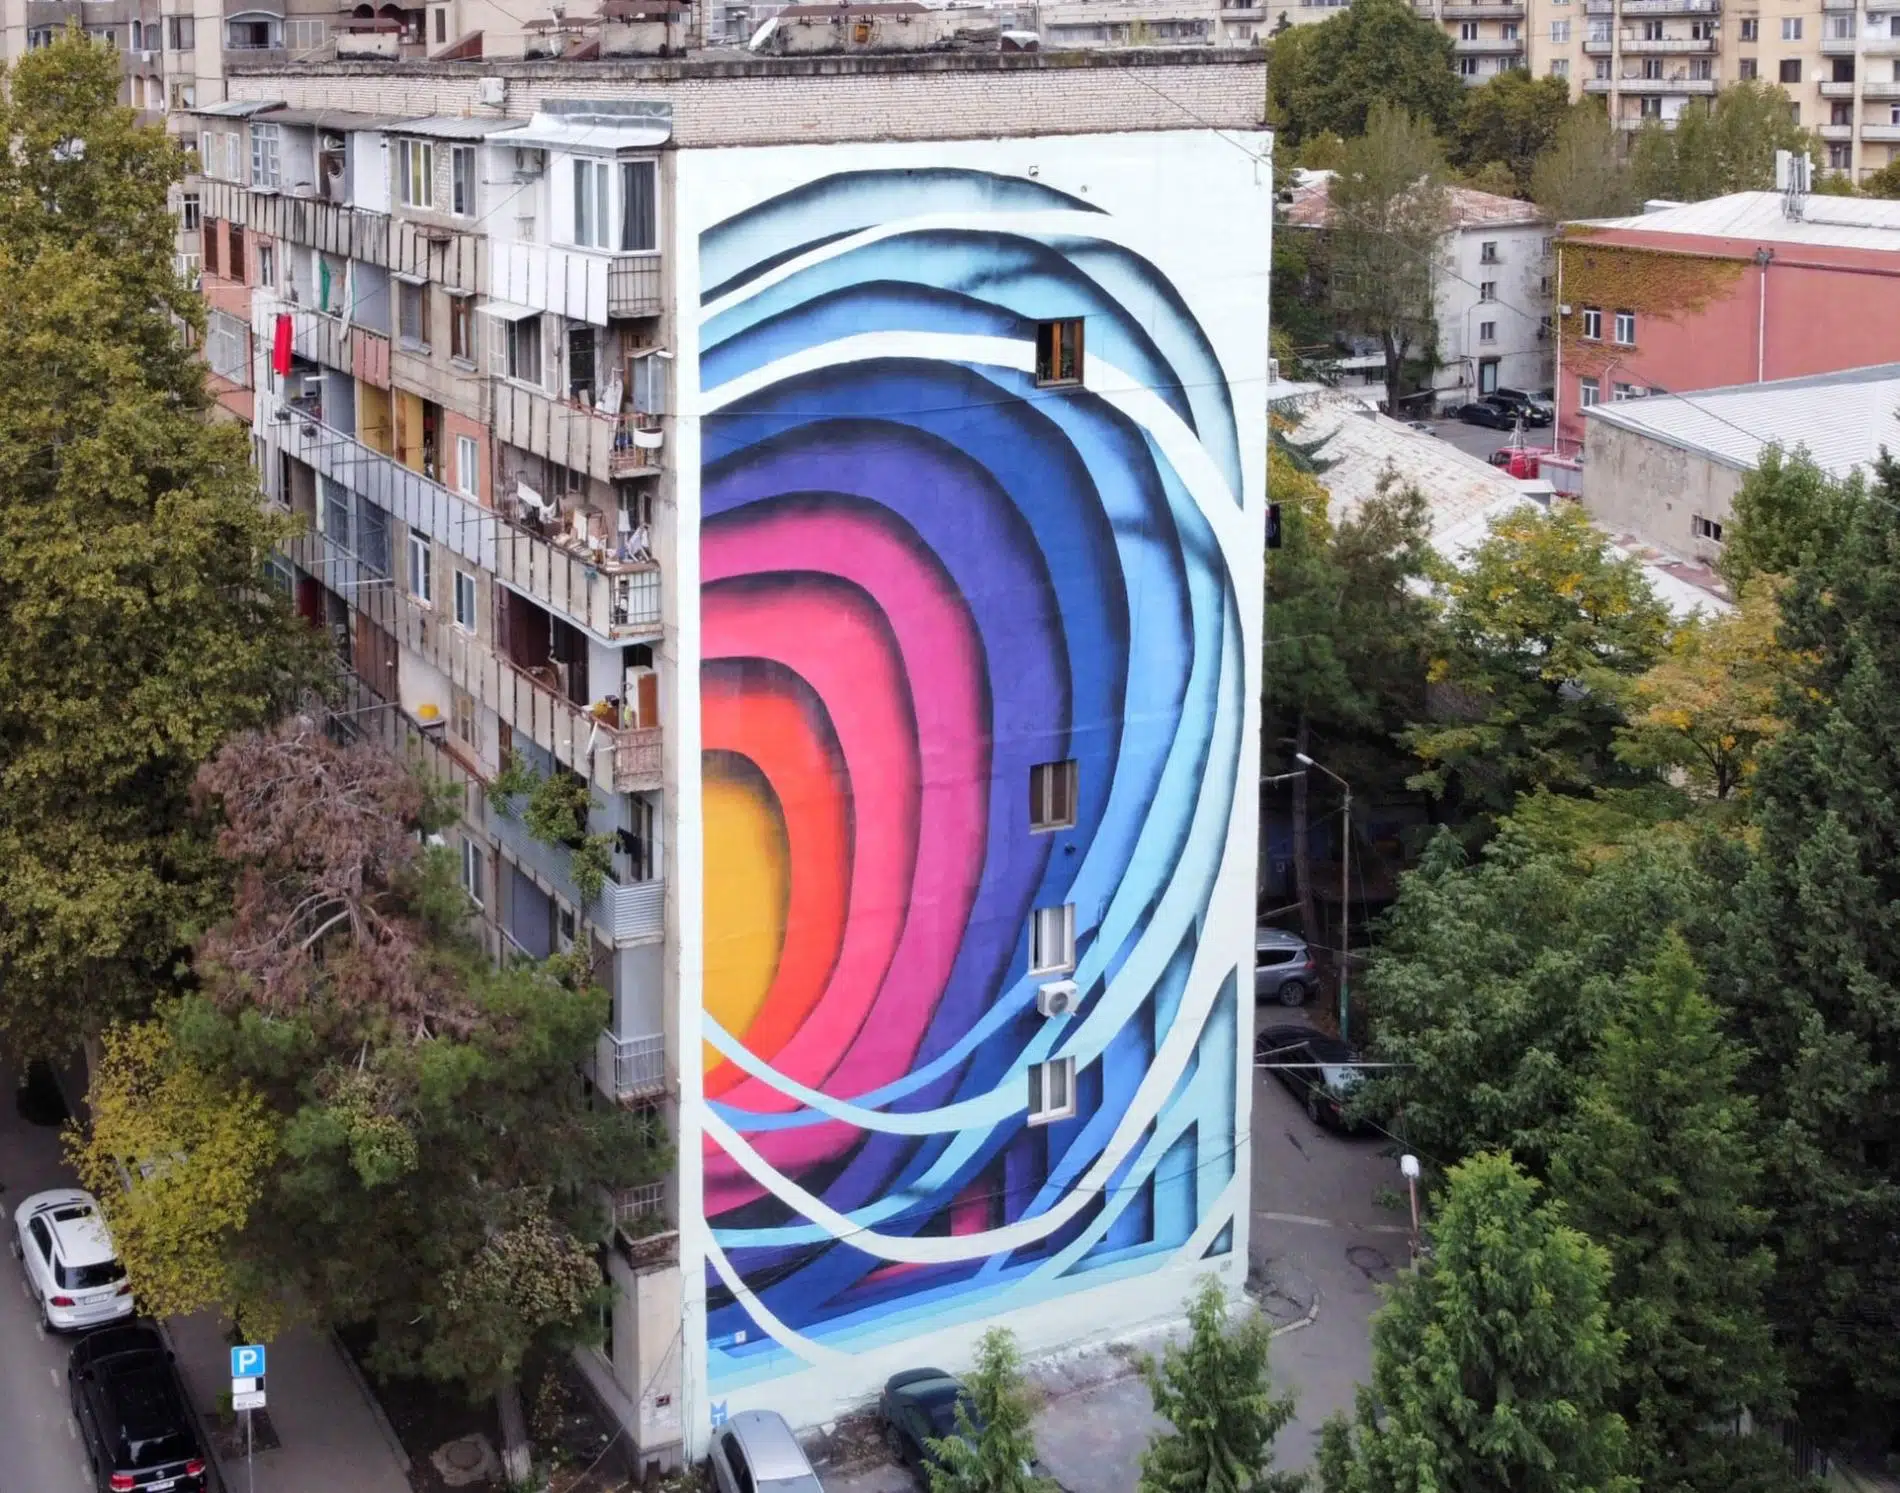 tbilisi mural fest, mural de ilusion optica com,o papel recortado de colores de 1010